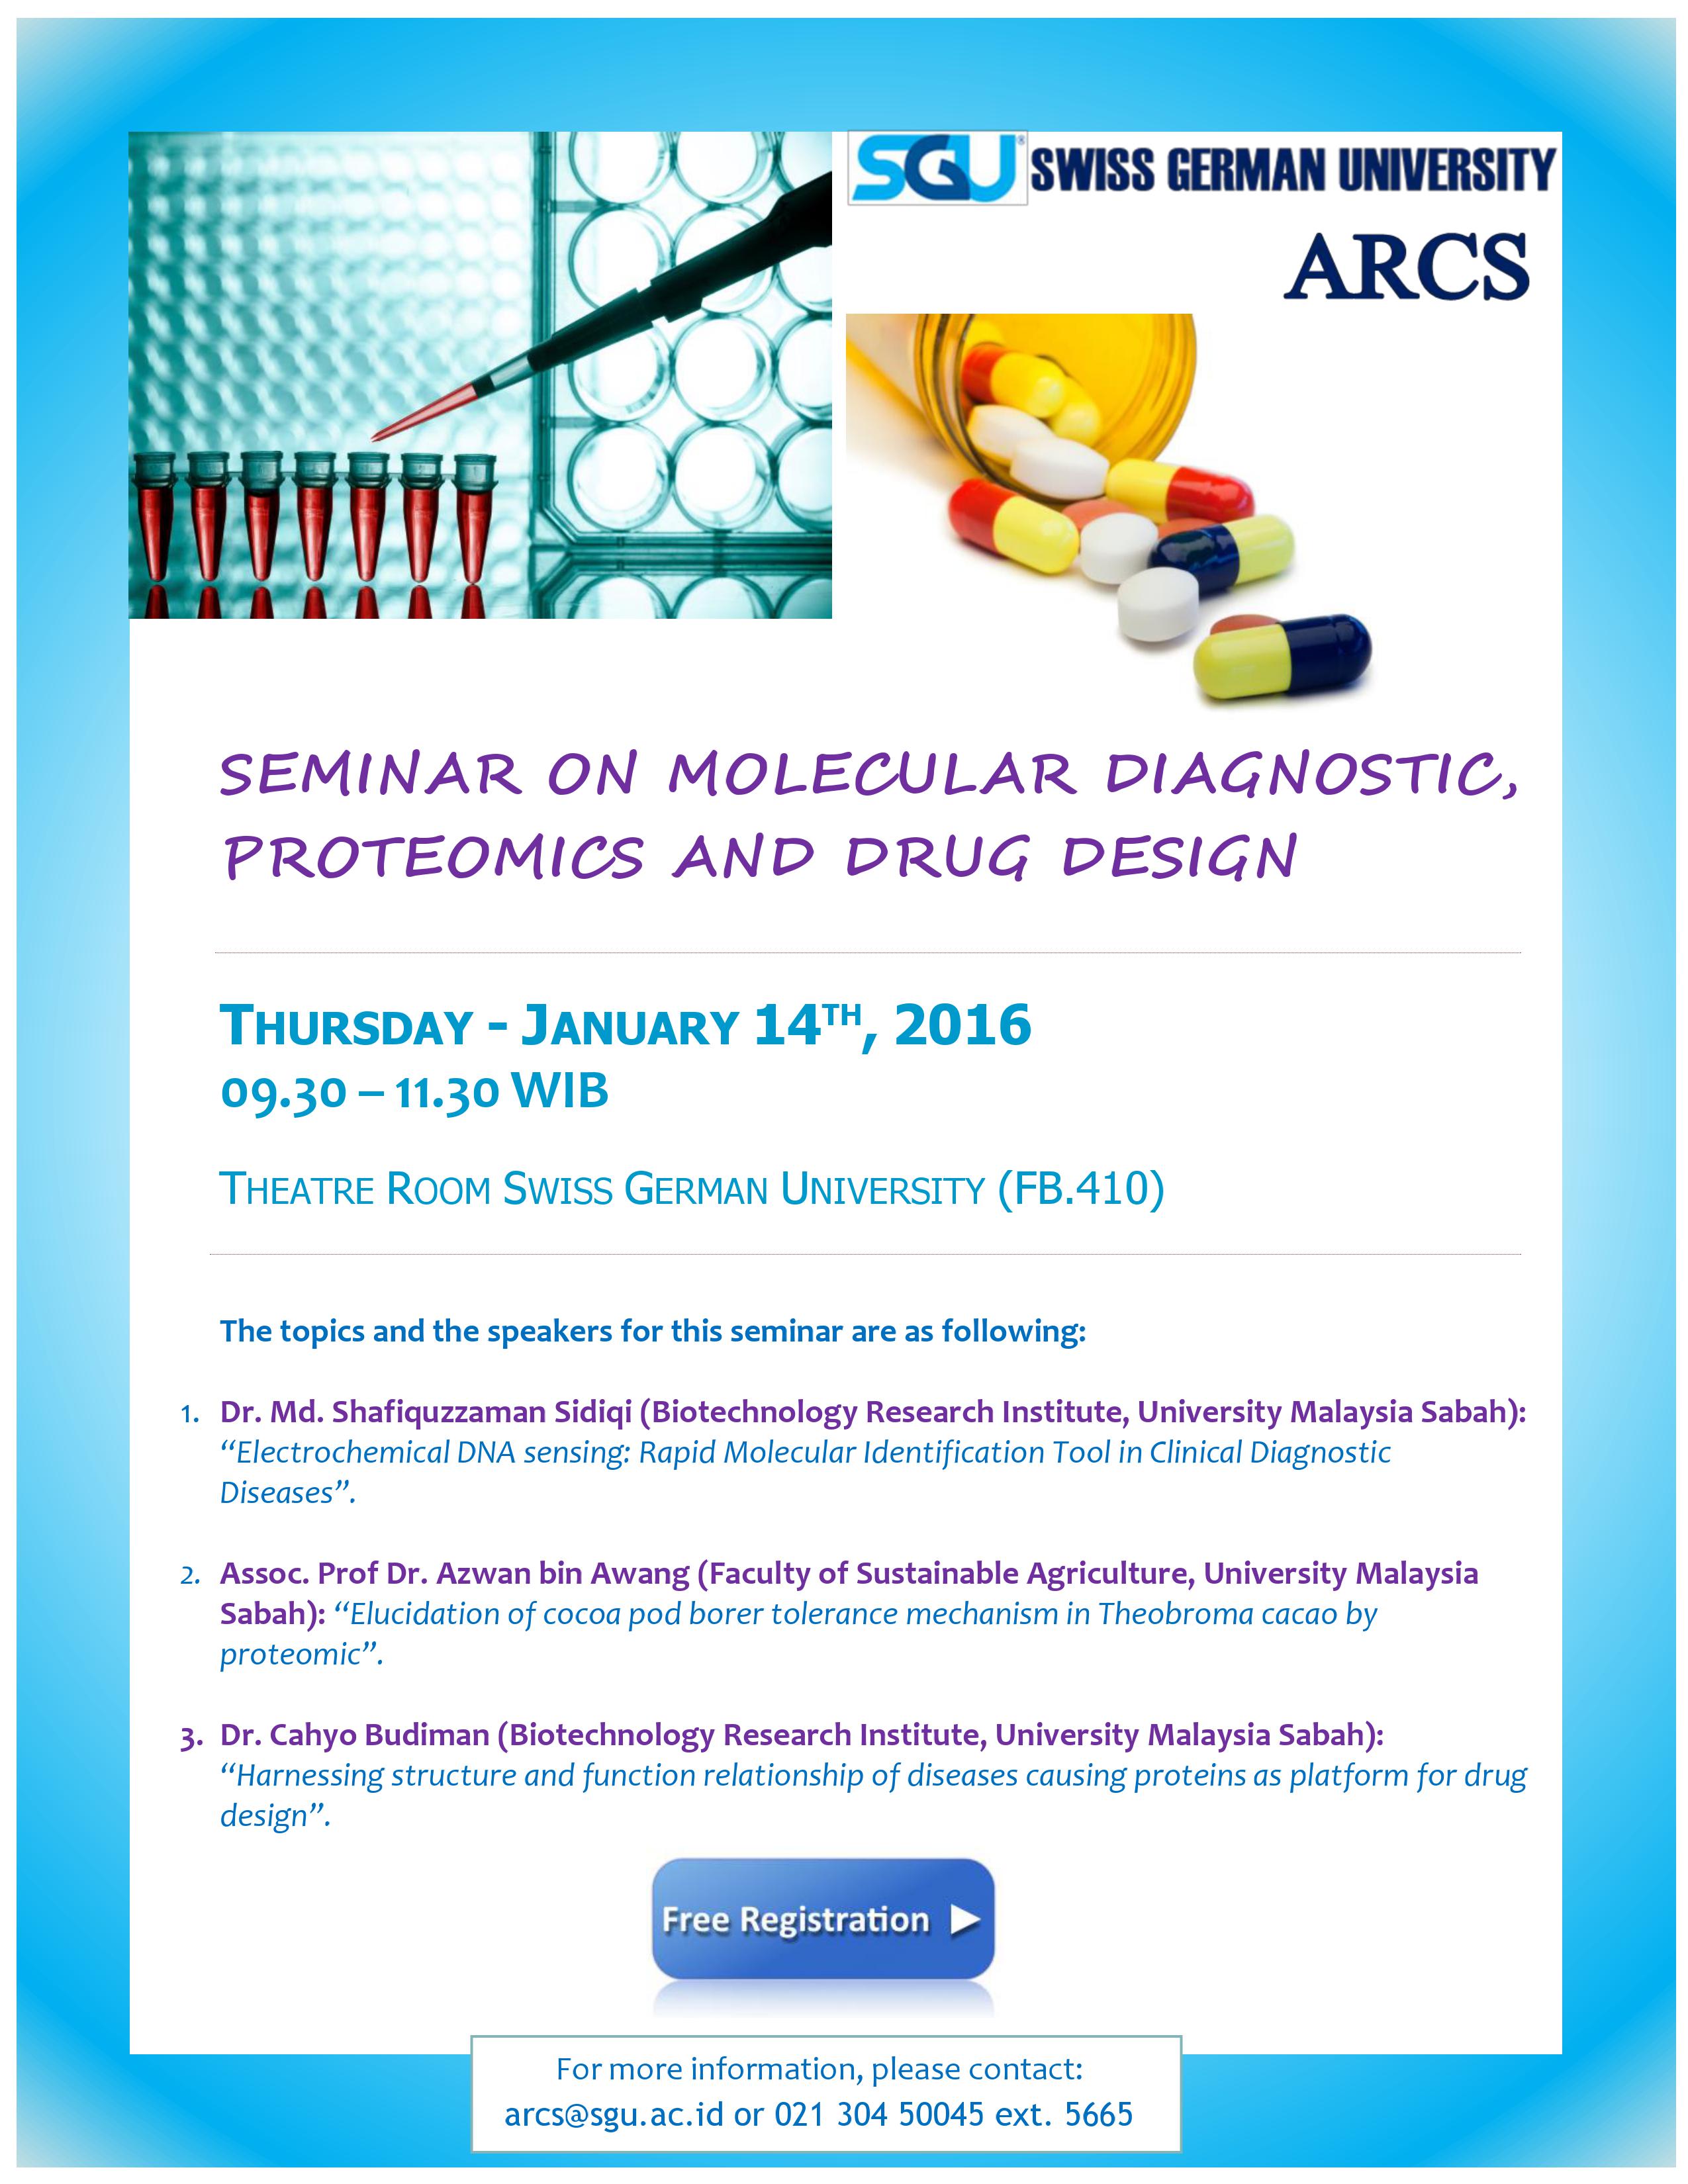 Seminar on Molecular Diagnostic, Proteomics, and Drug Design